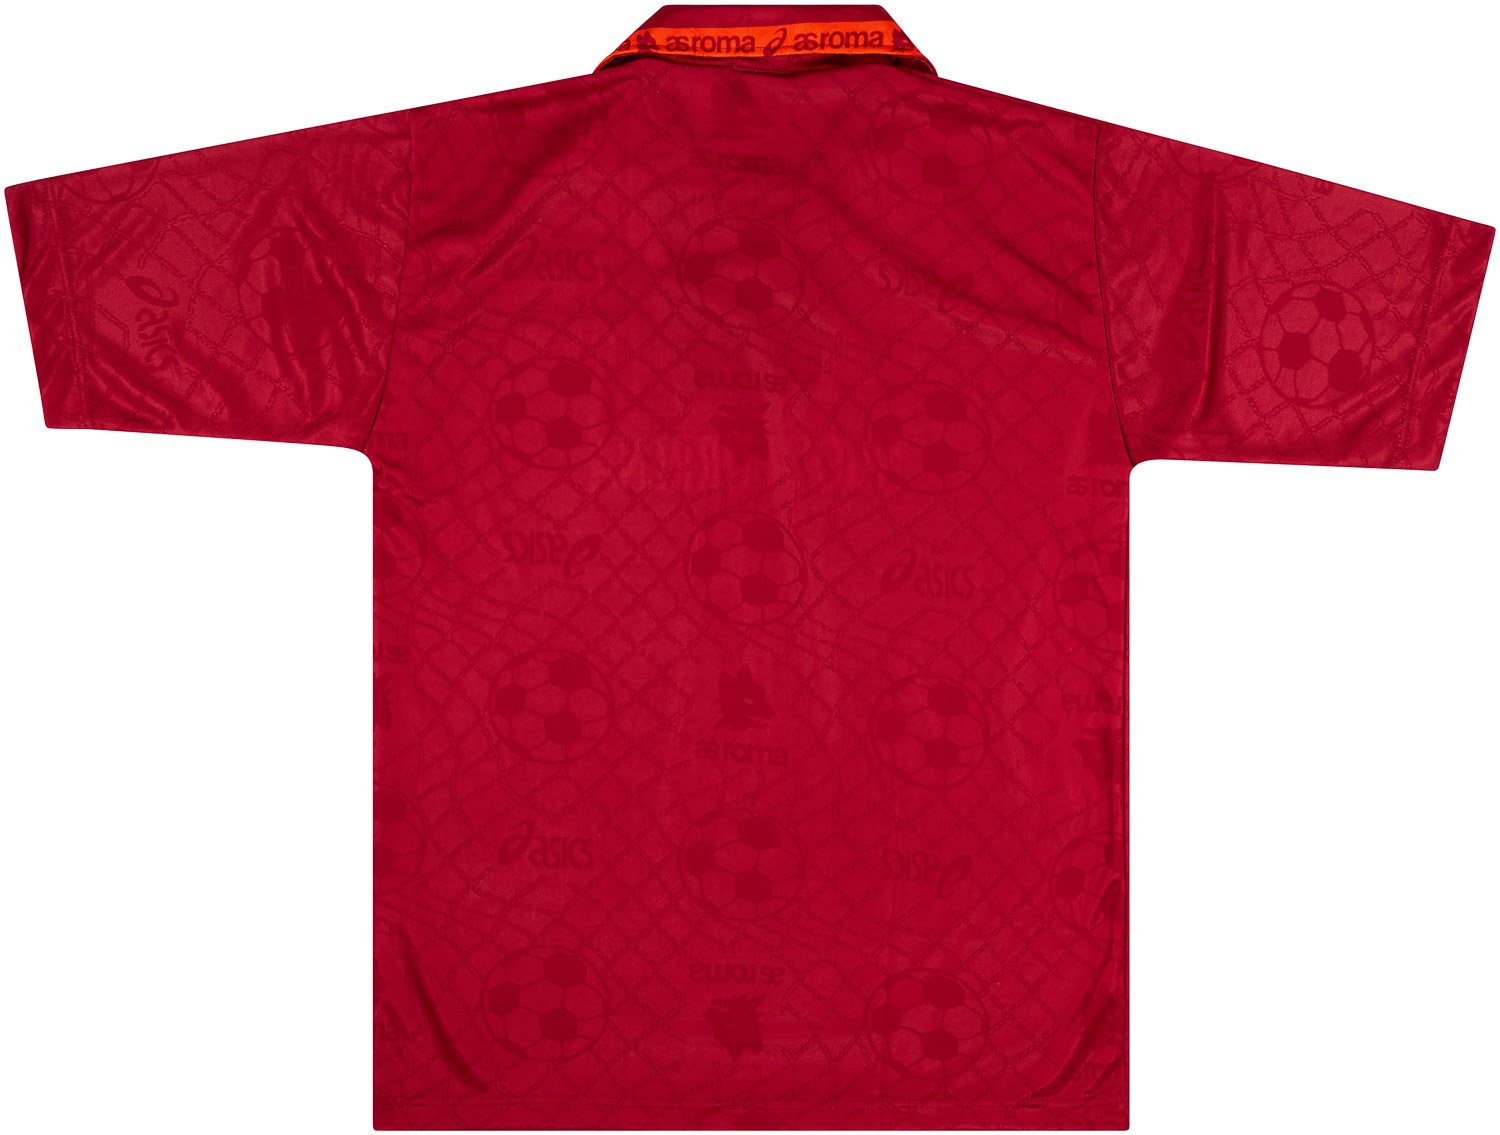 Tottenham 94/95 Home Shirt - Bargain Football Shirts